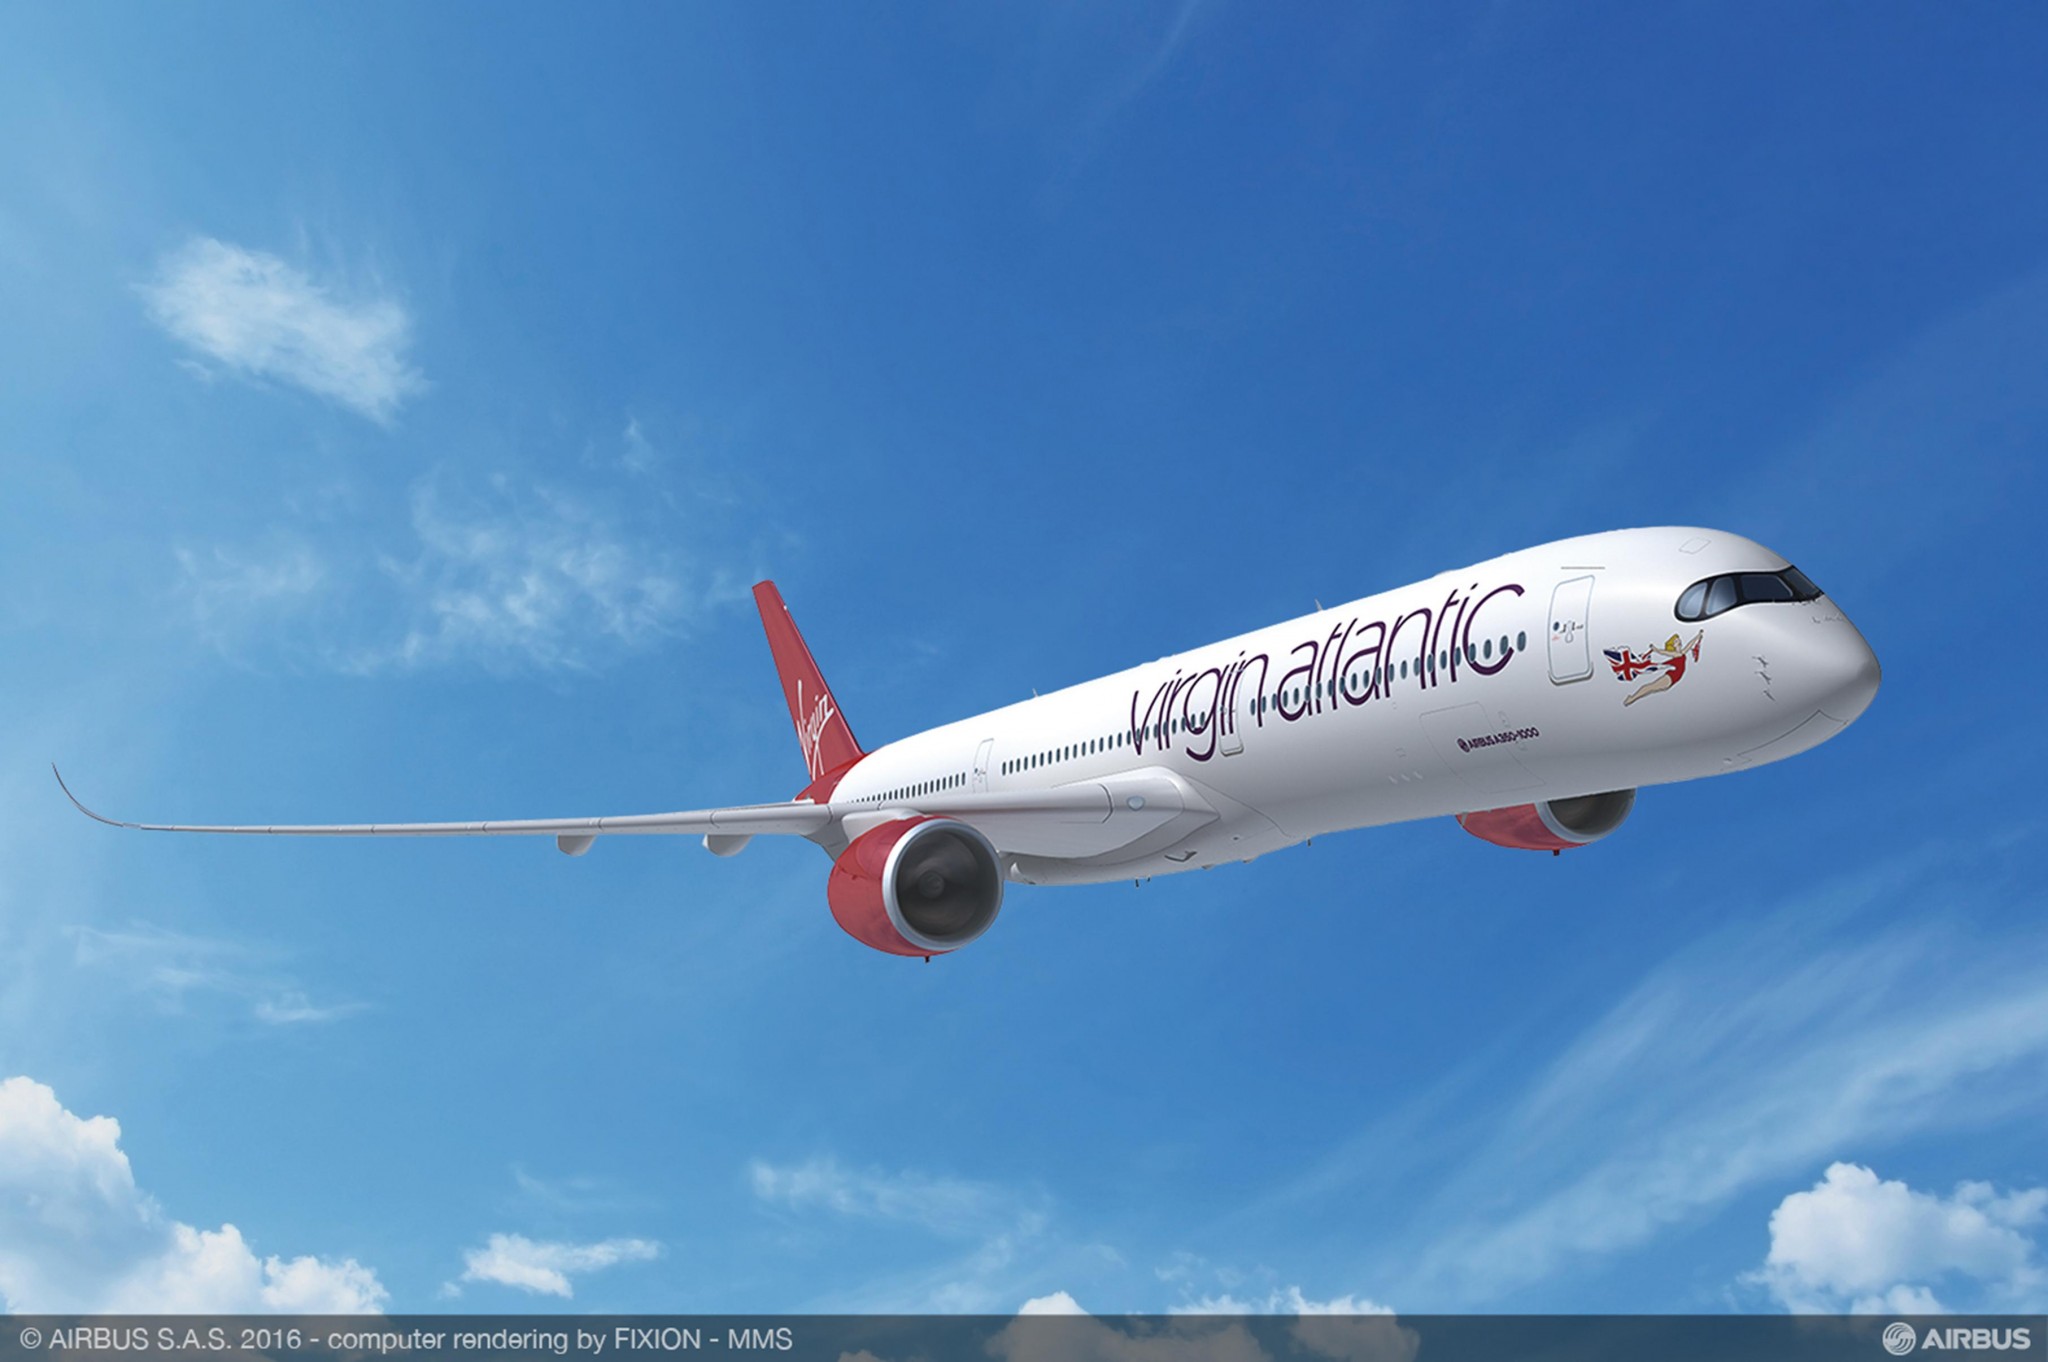 Virgin Atlantic expands its transatlantic joint venture to Air France-KLM